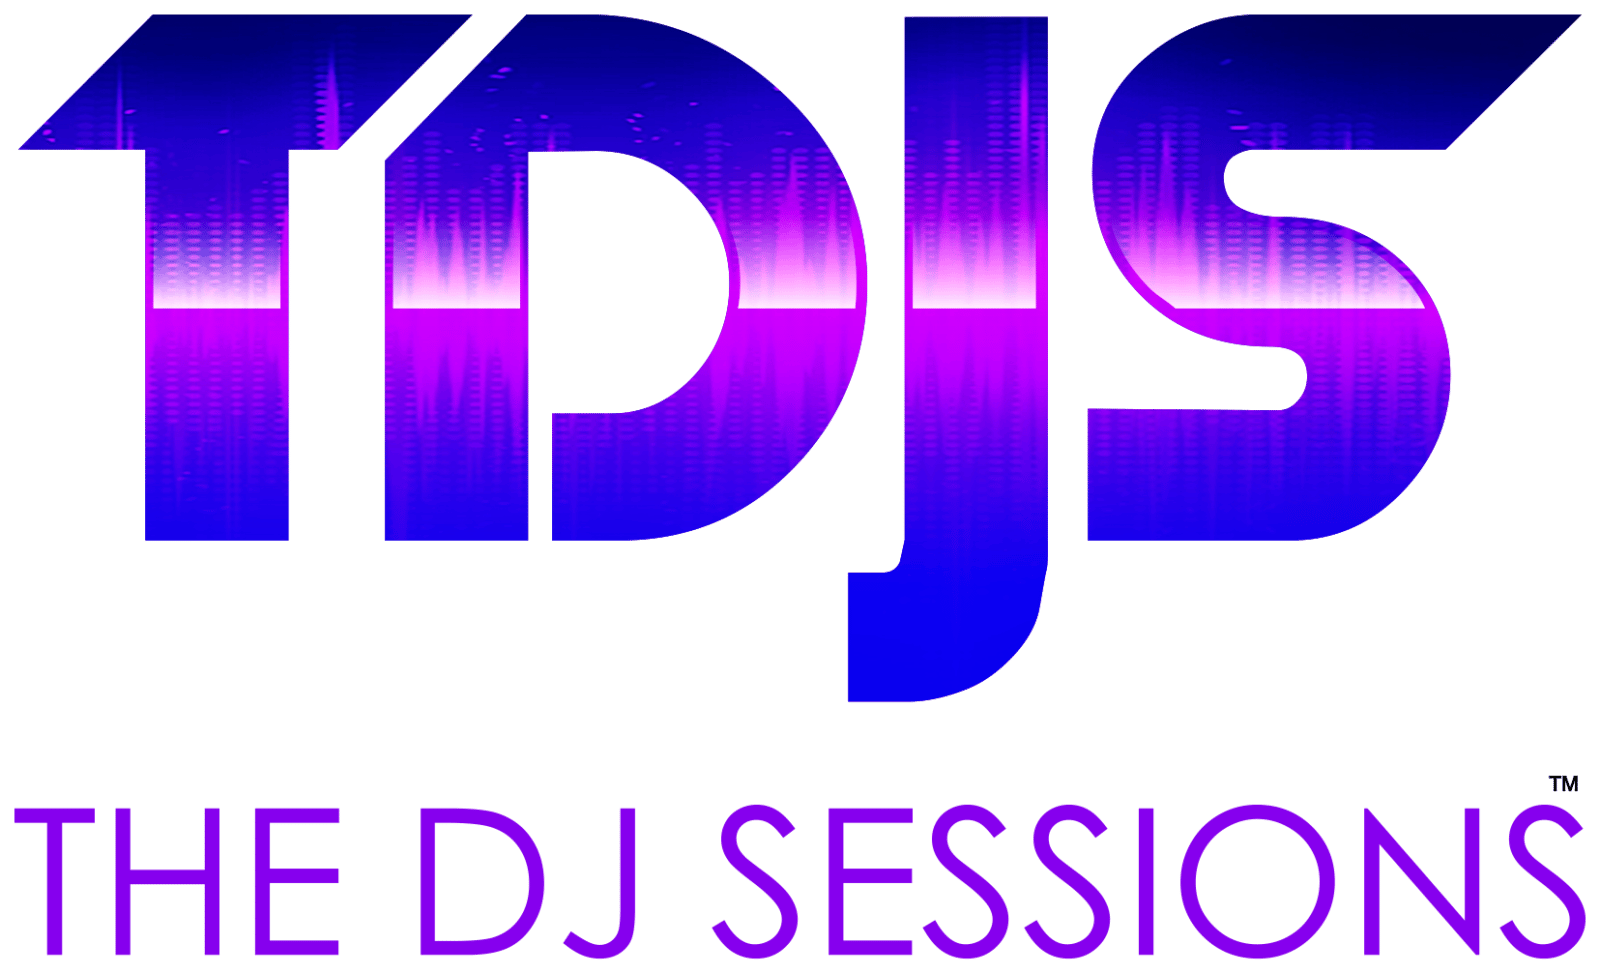 TDJS Newsletter on The DJ Sessions